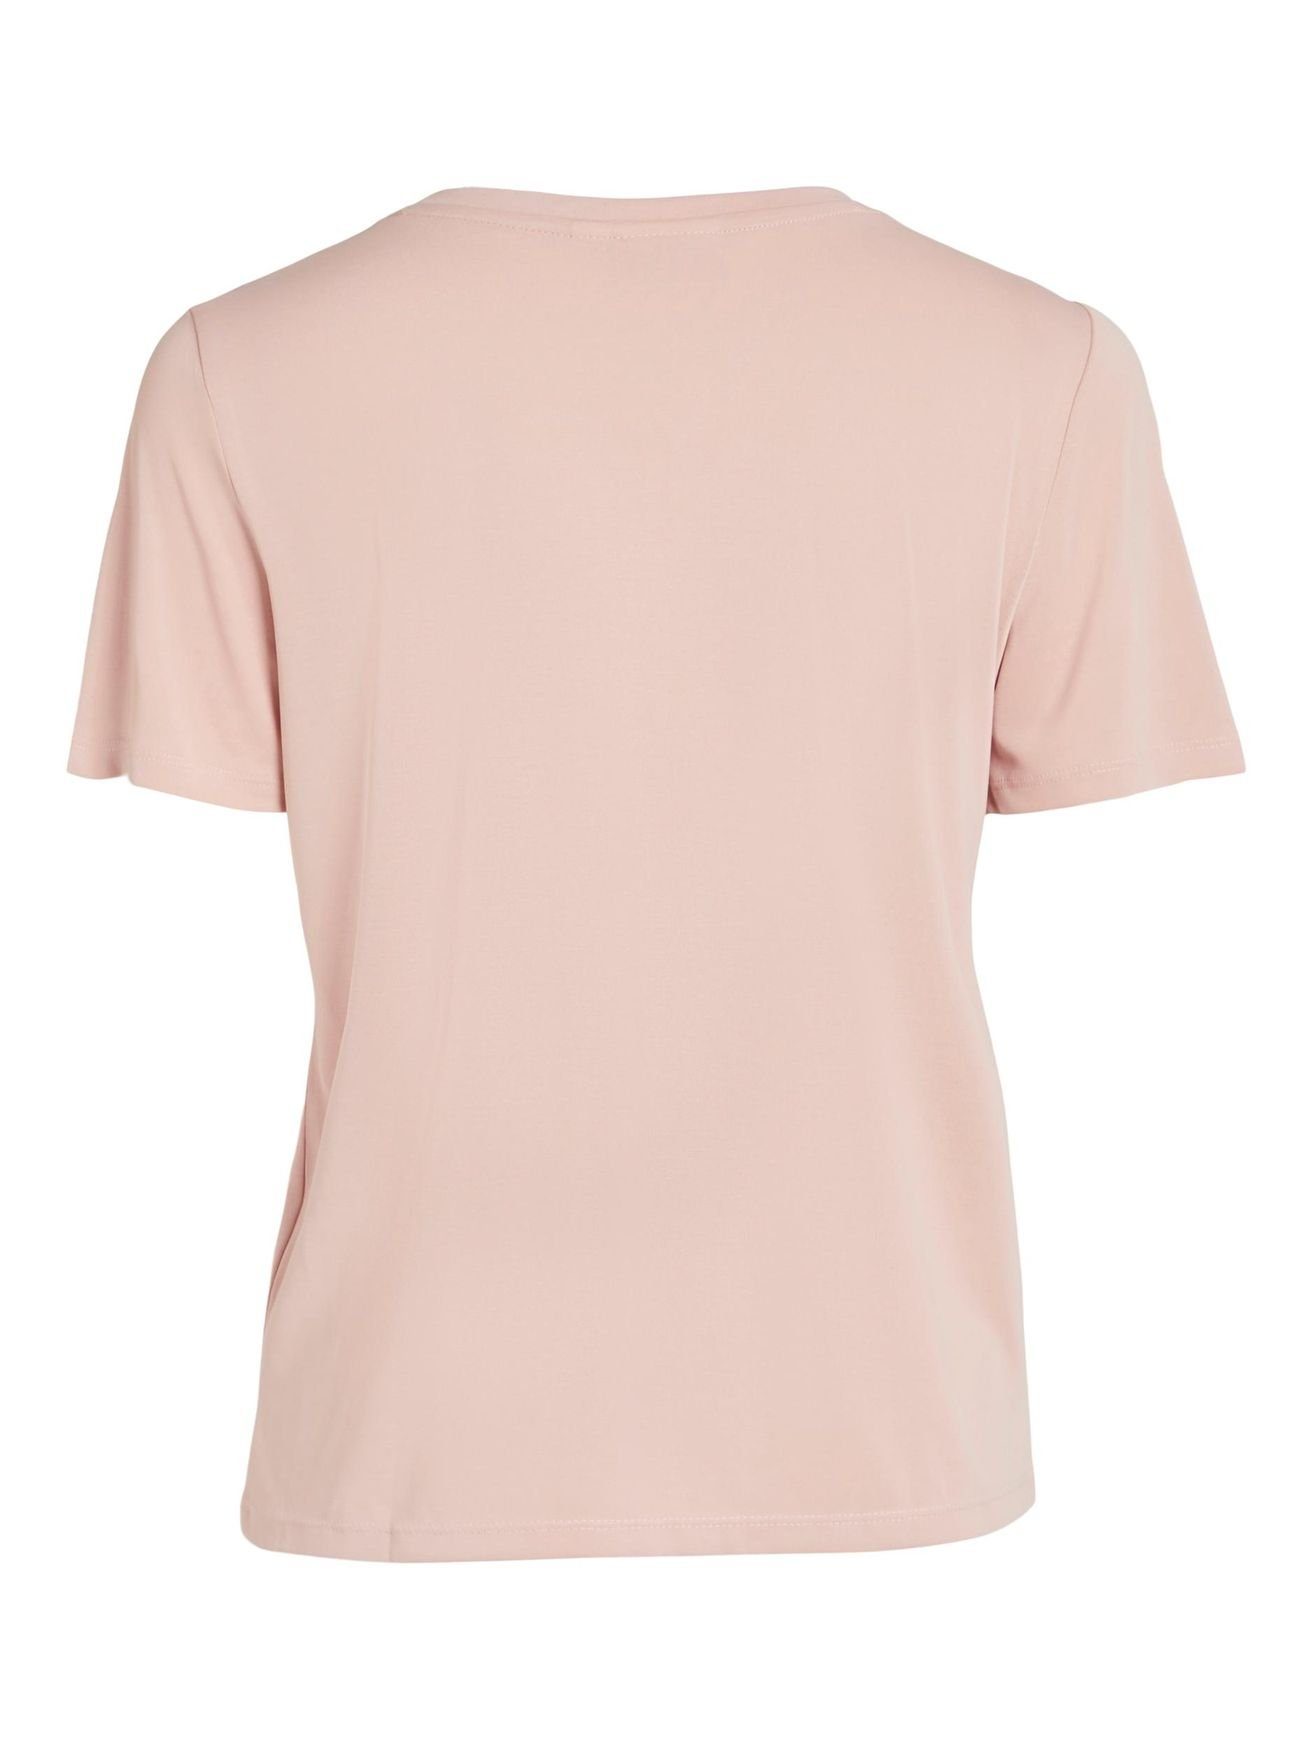 Vila T-Shirt in Rosa Kurzarm T-Shirt Top Rundhals Oberteil VIMODALA 4870 Basic